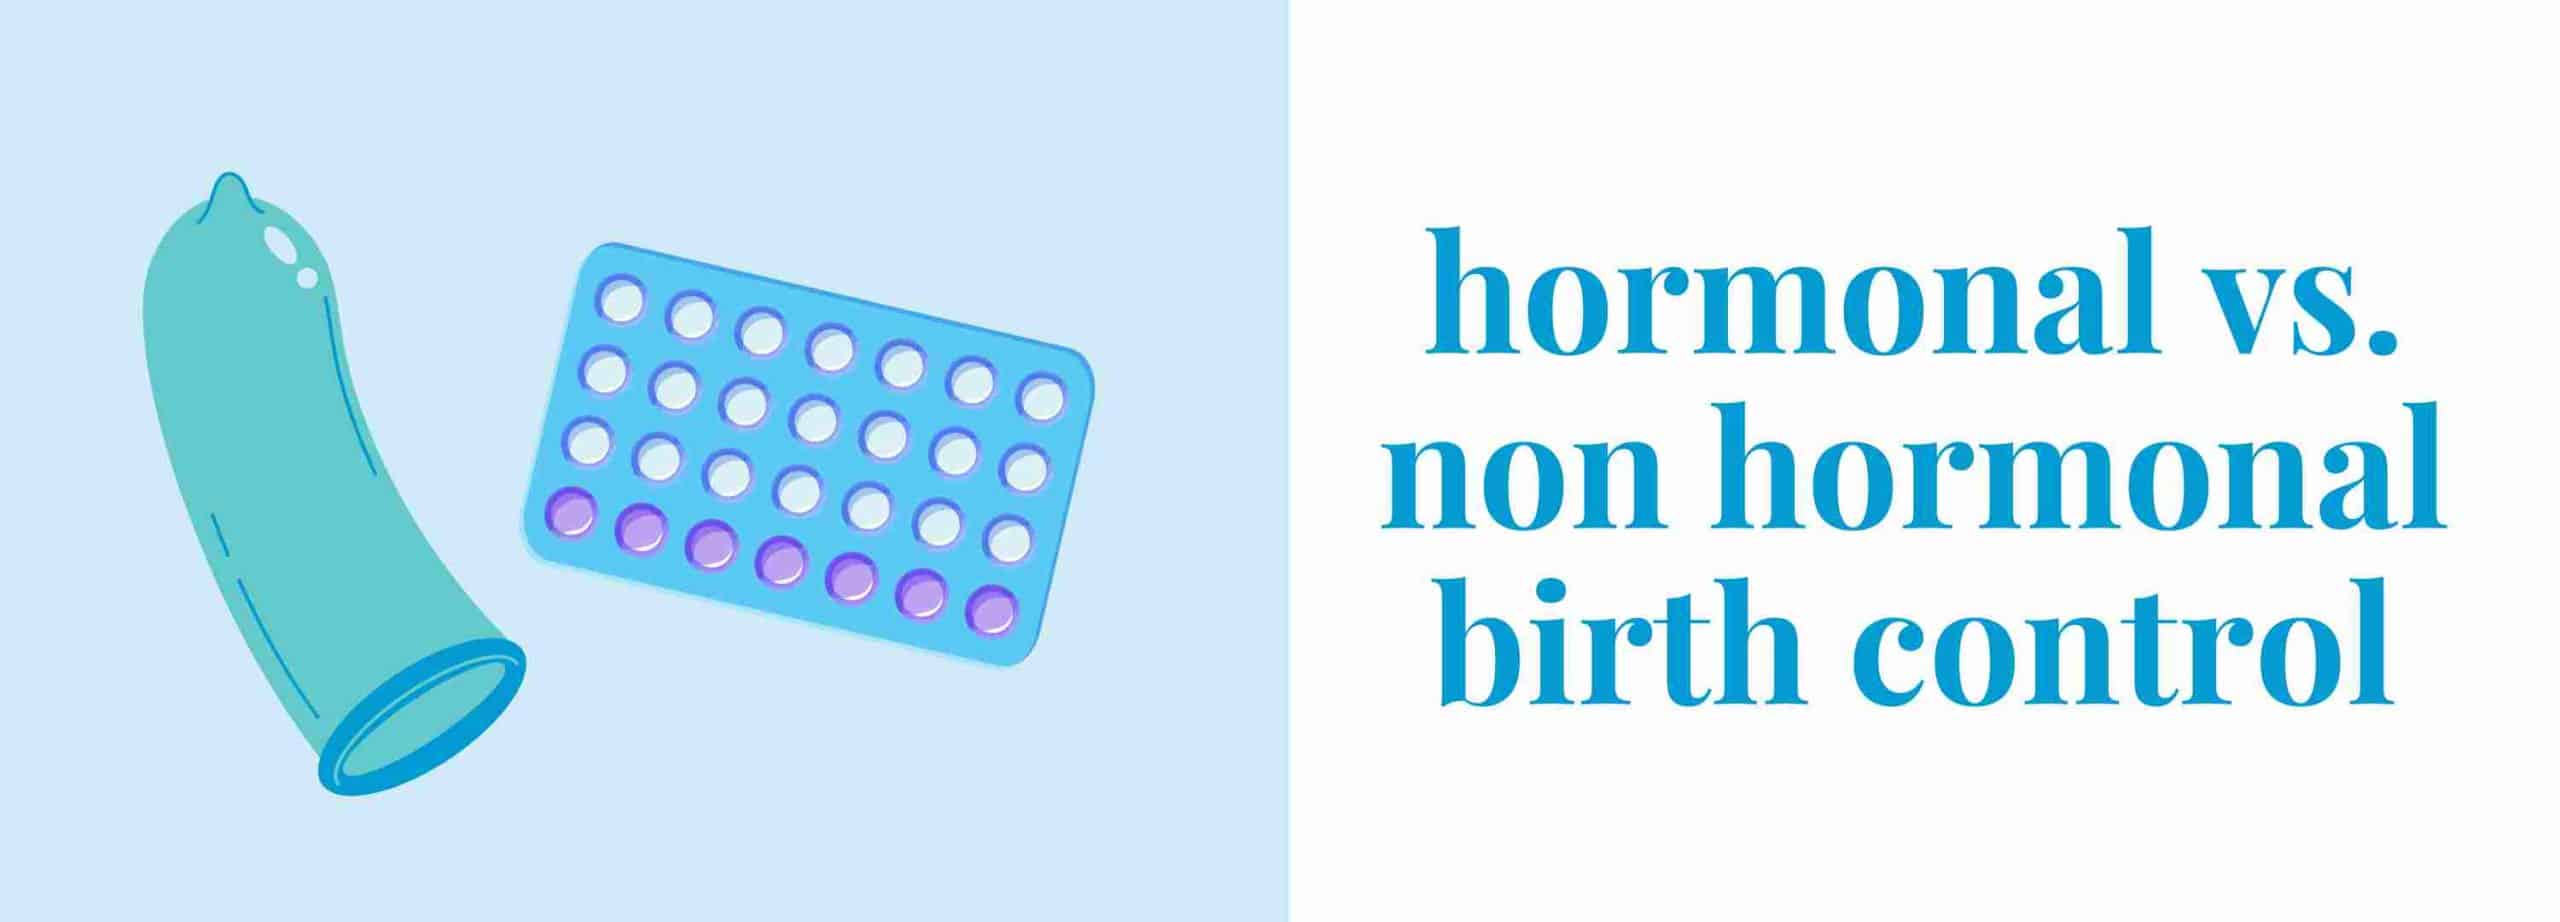 Hormonal Vs non hormonal birth control